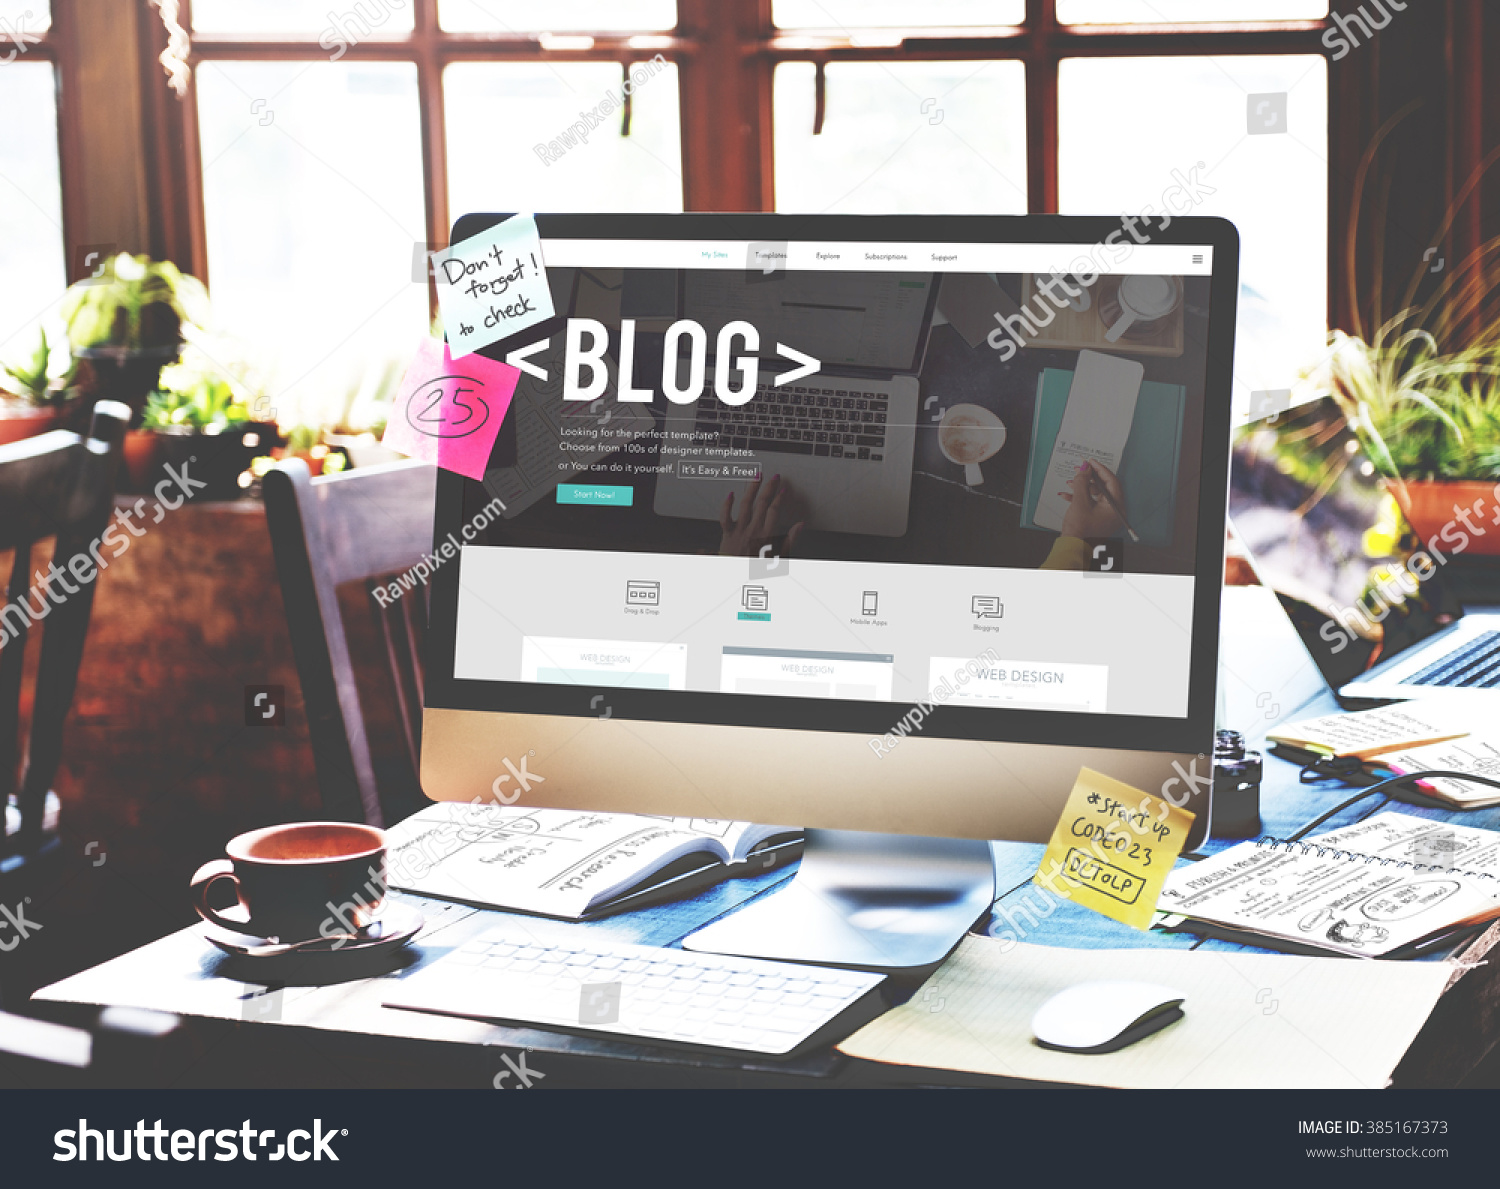 Blog Blogging Homepage Social Media Network Concept #385167373